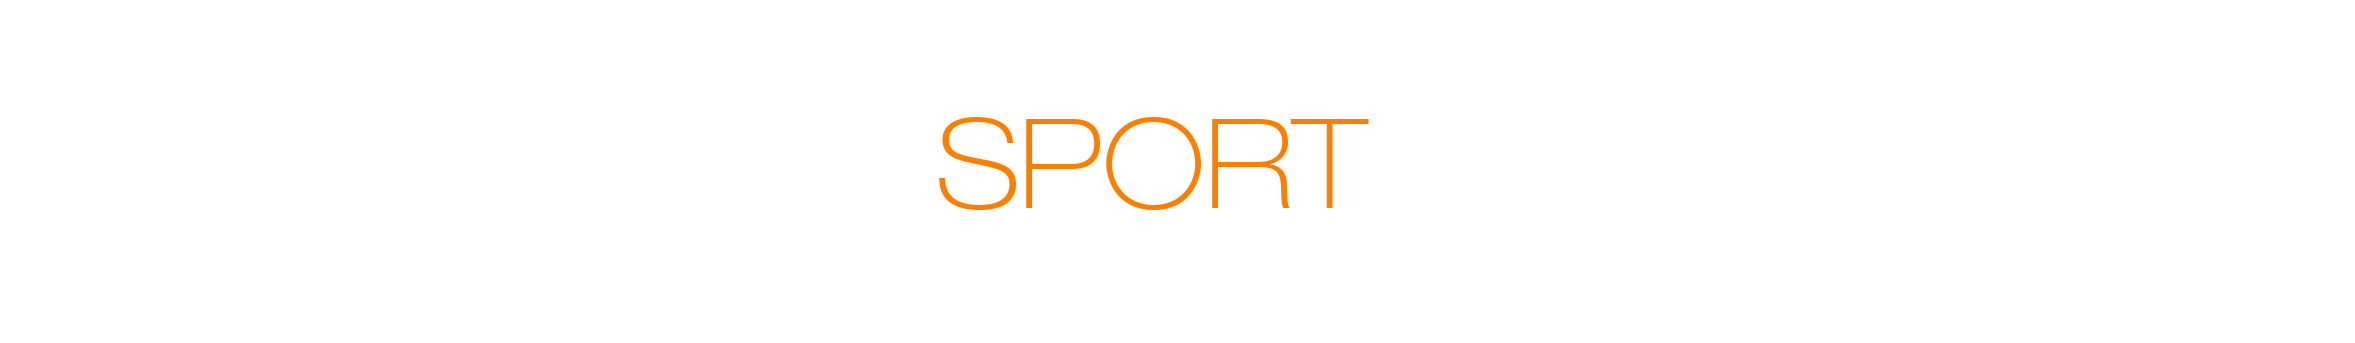 Sport - 1 - Title.jpg